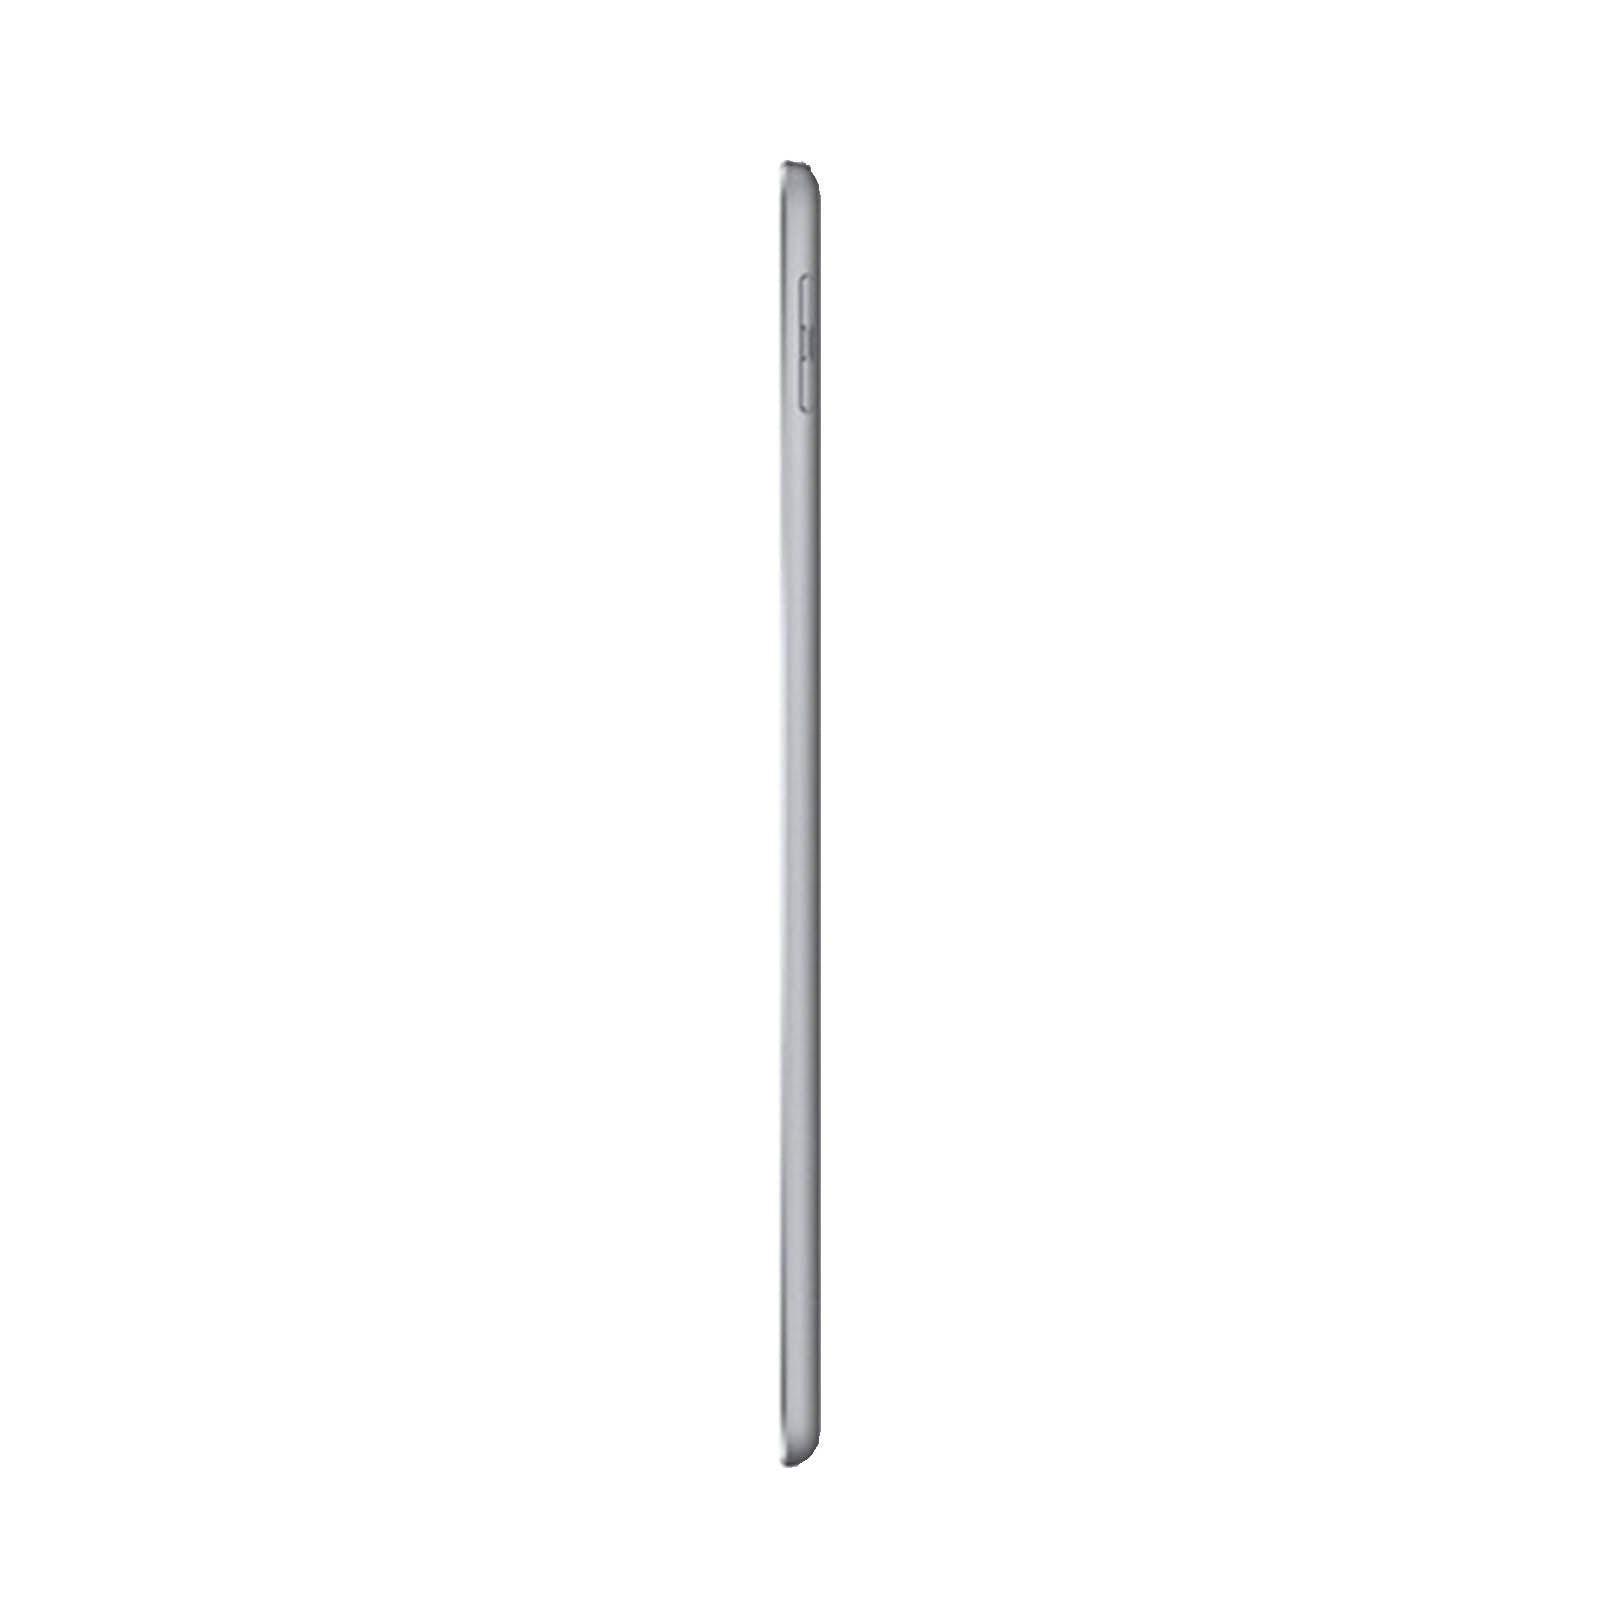 Apple iPad 4 32GB Nero WiFi Buono